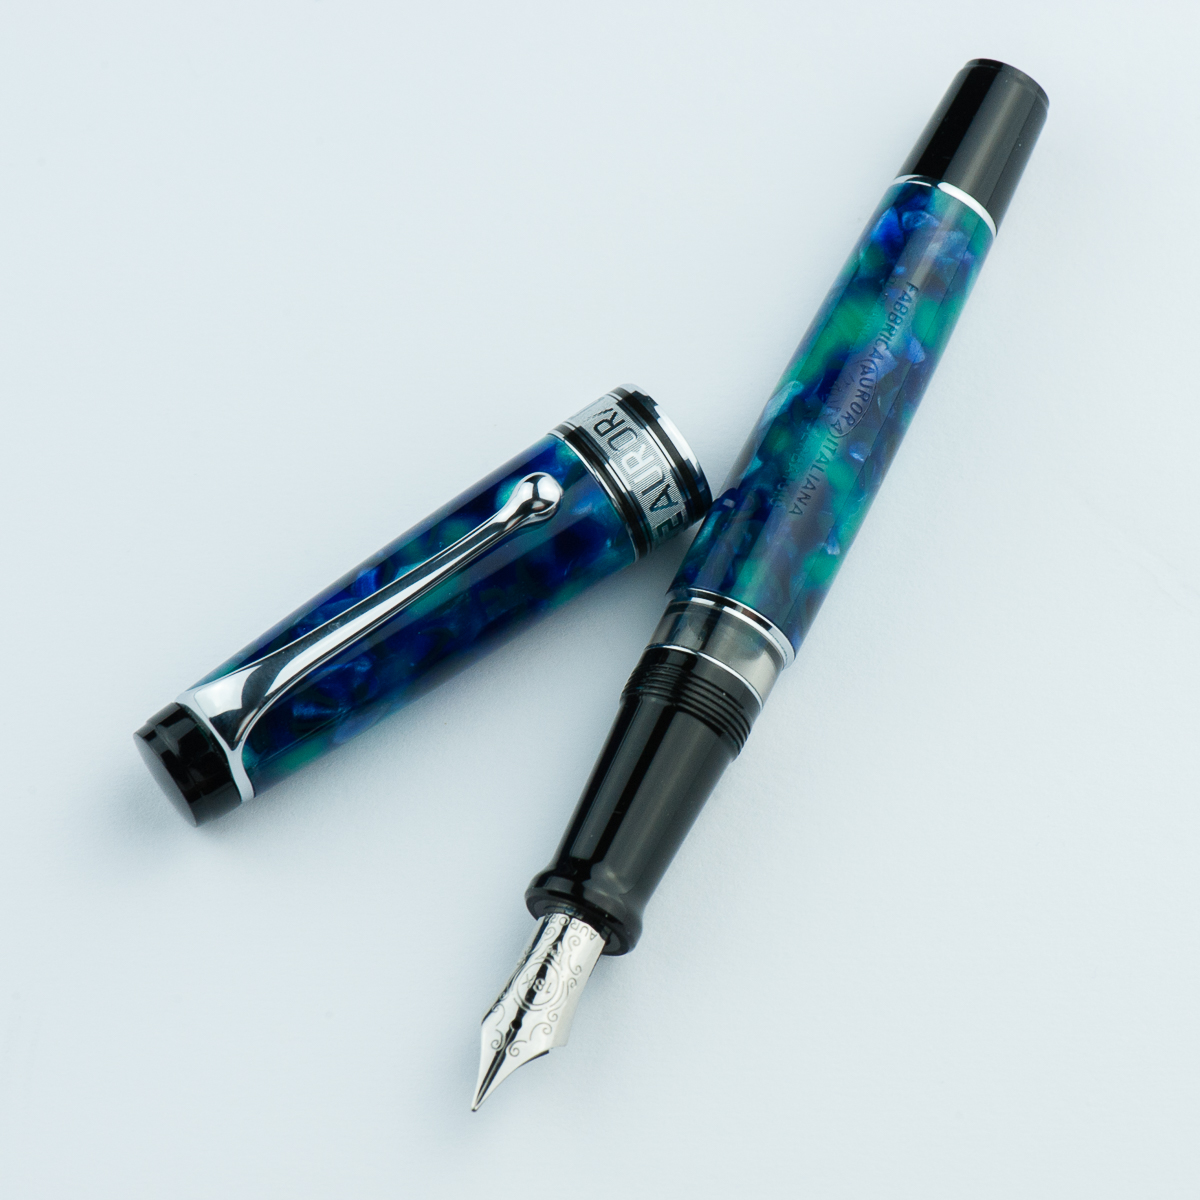 New Inc Optimus Felt Tip Pens Fine Point, 1 pack of 3 Pens ~Optimus ~ Black  Ink